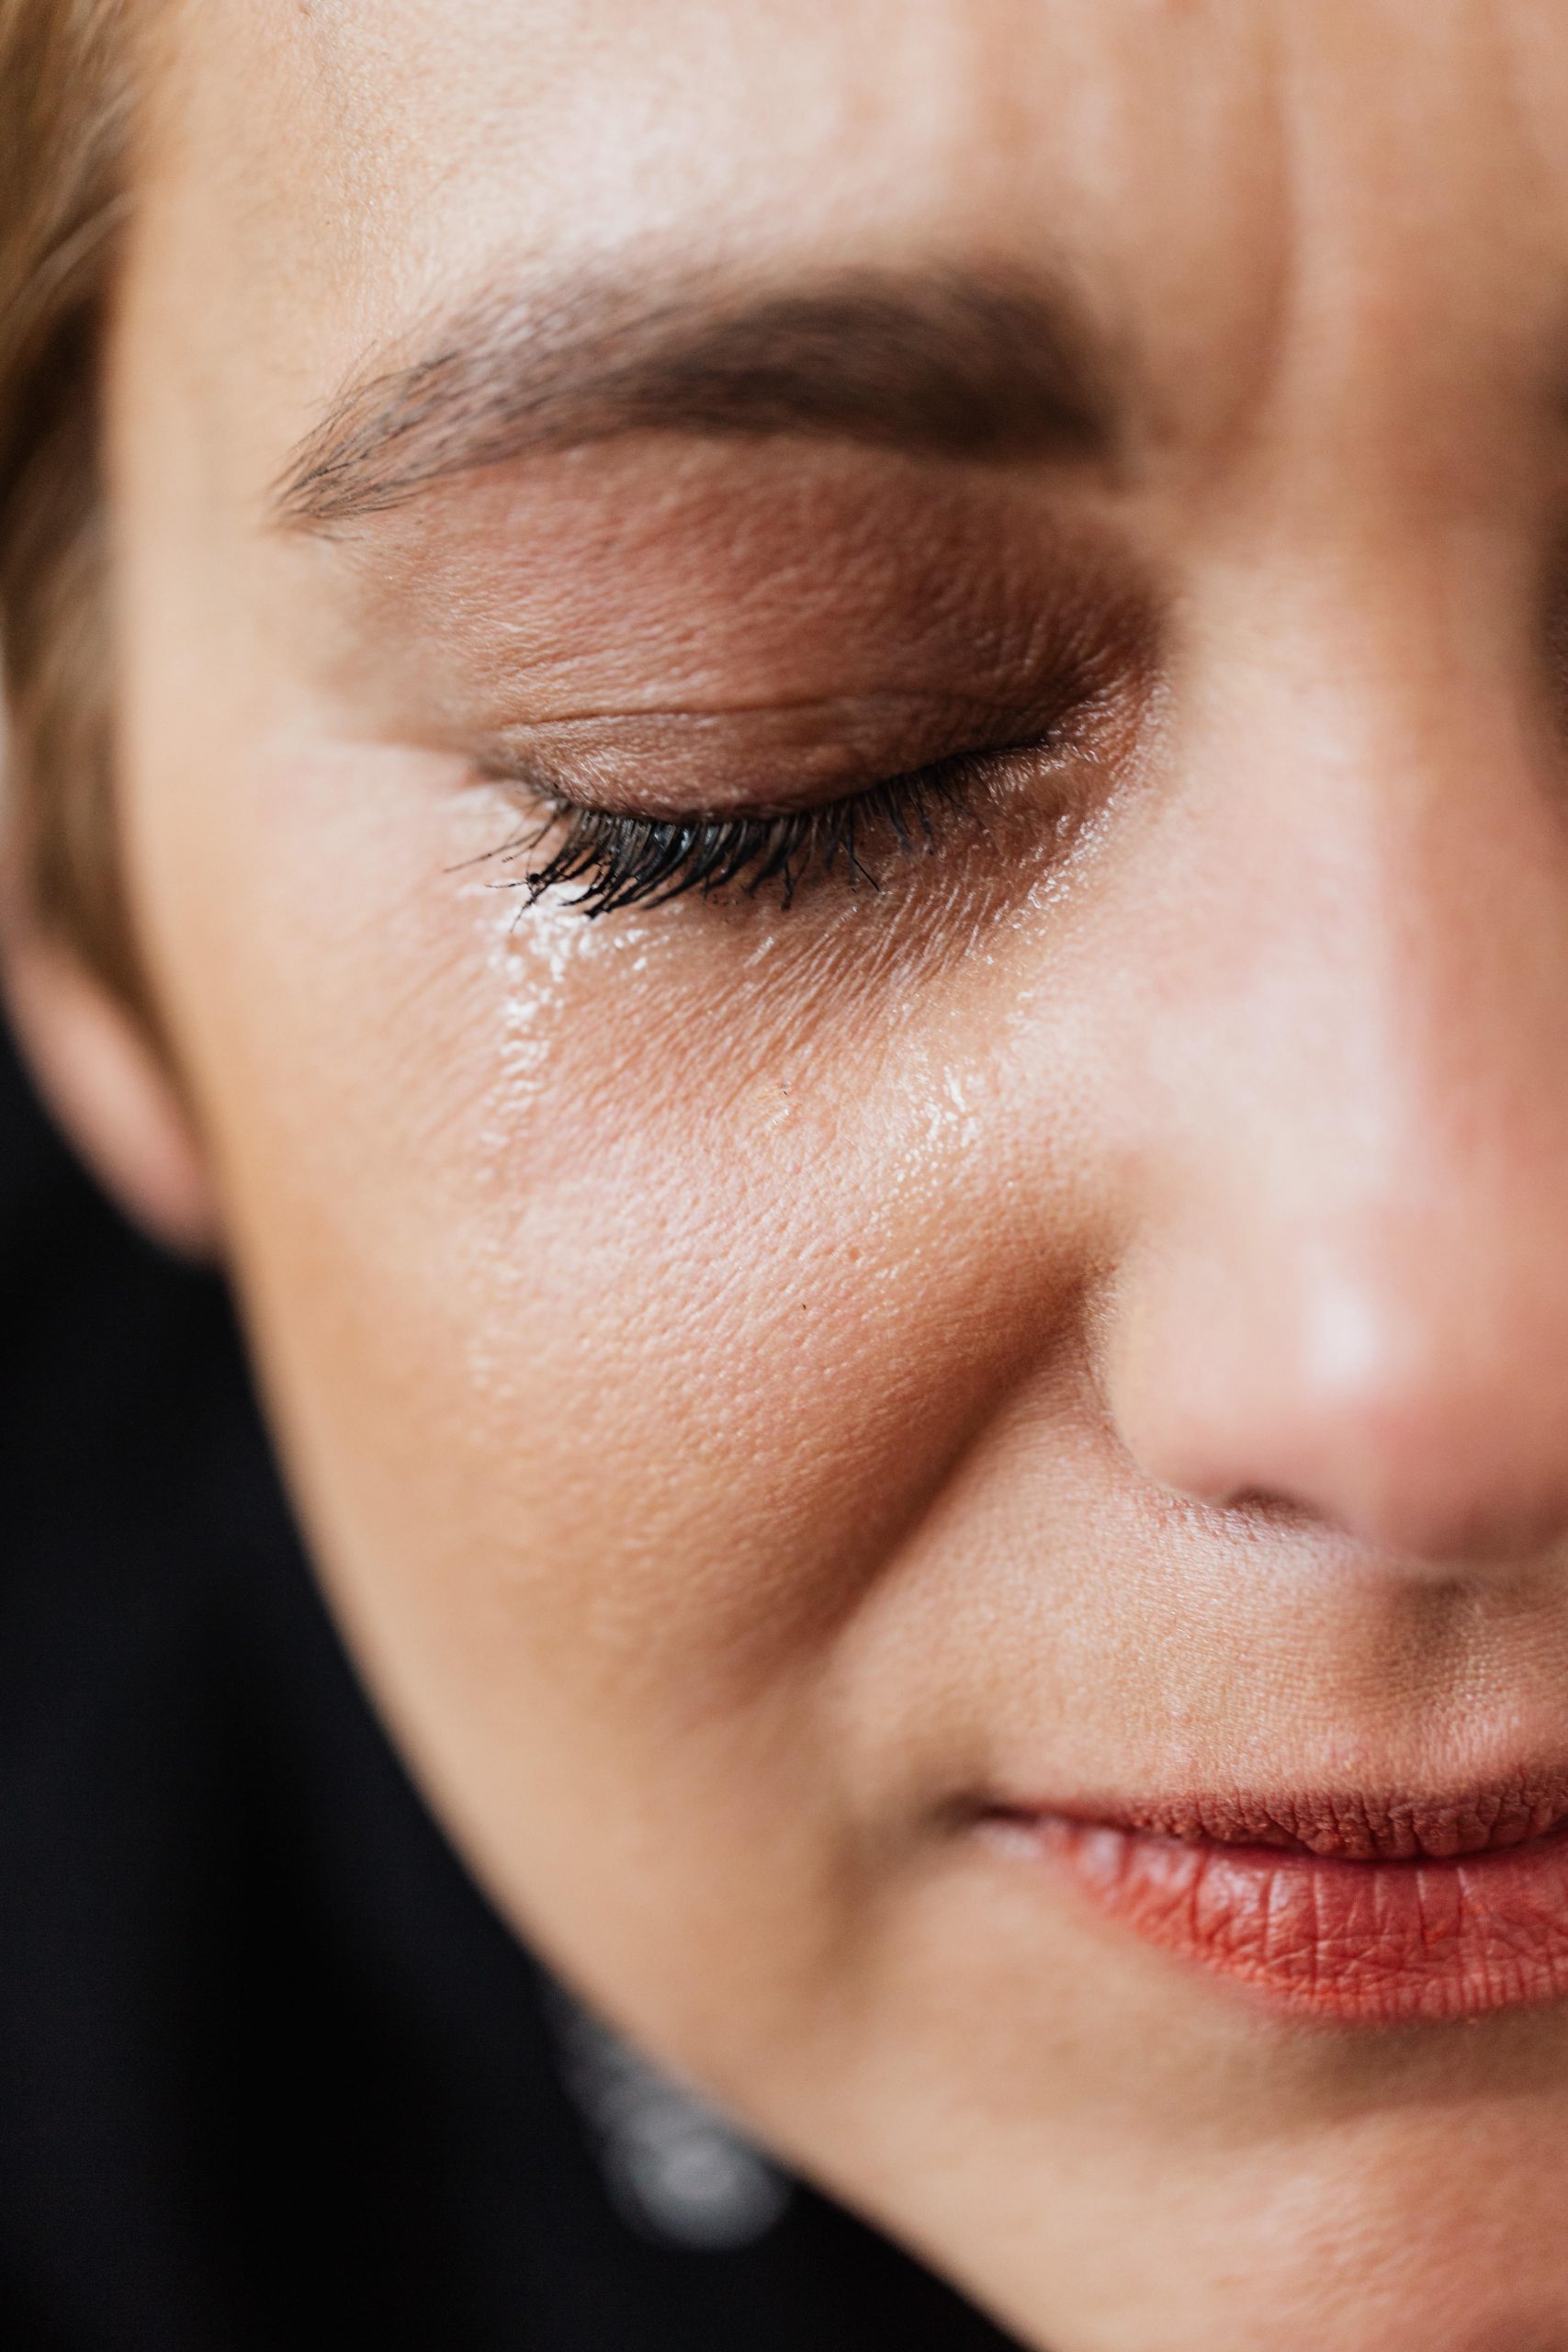 List of Women's Anxiety Symptoms